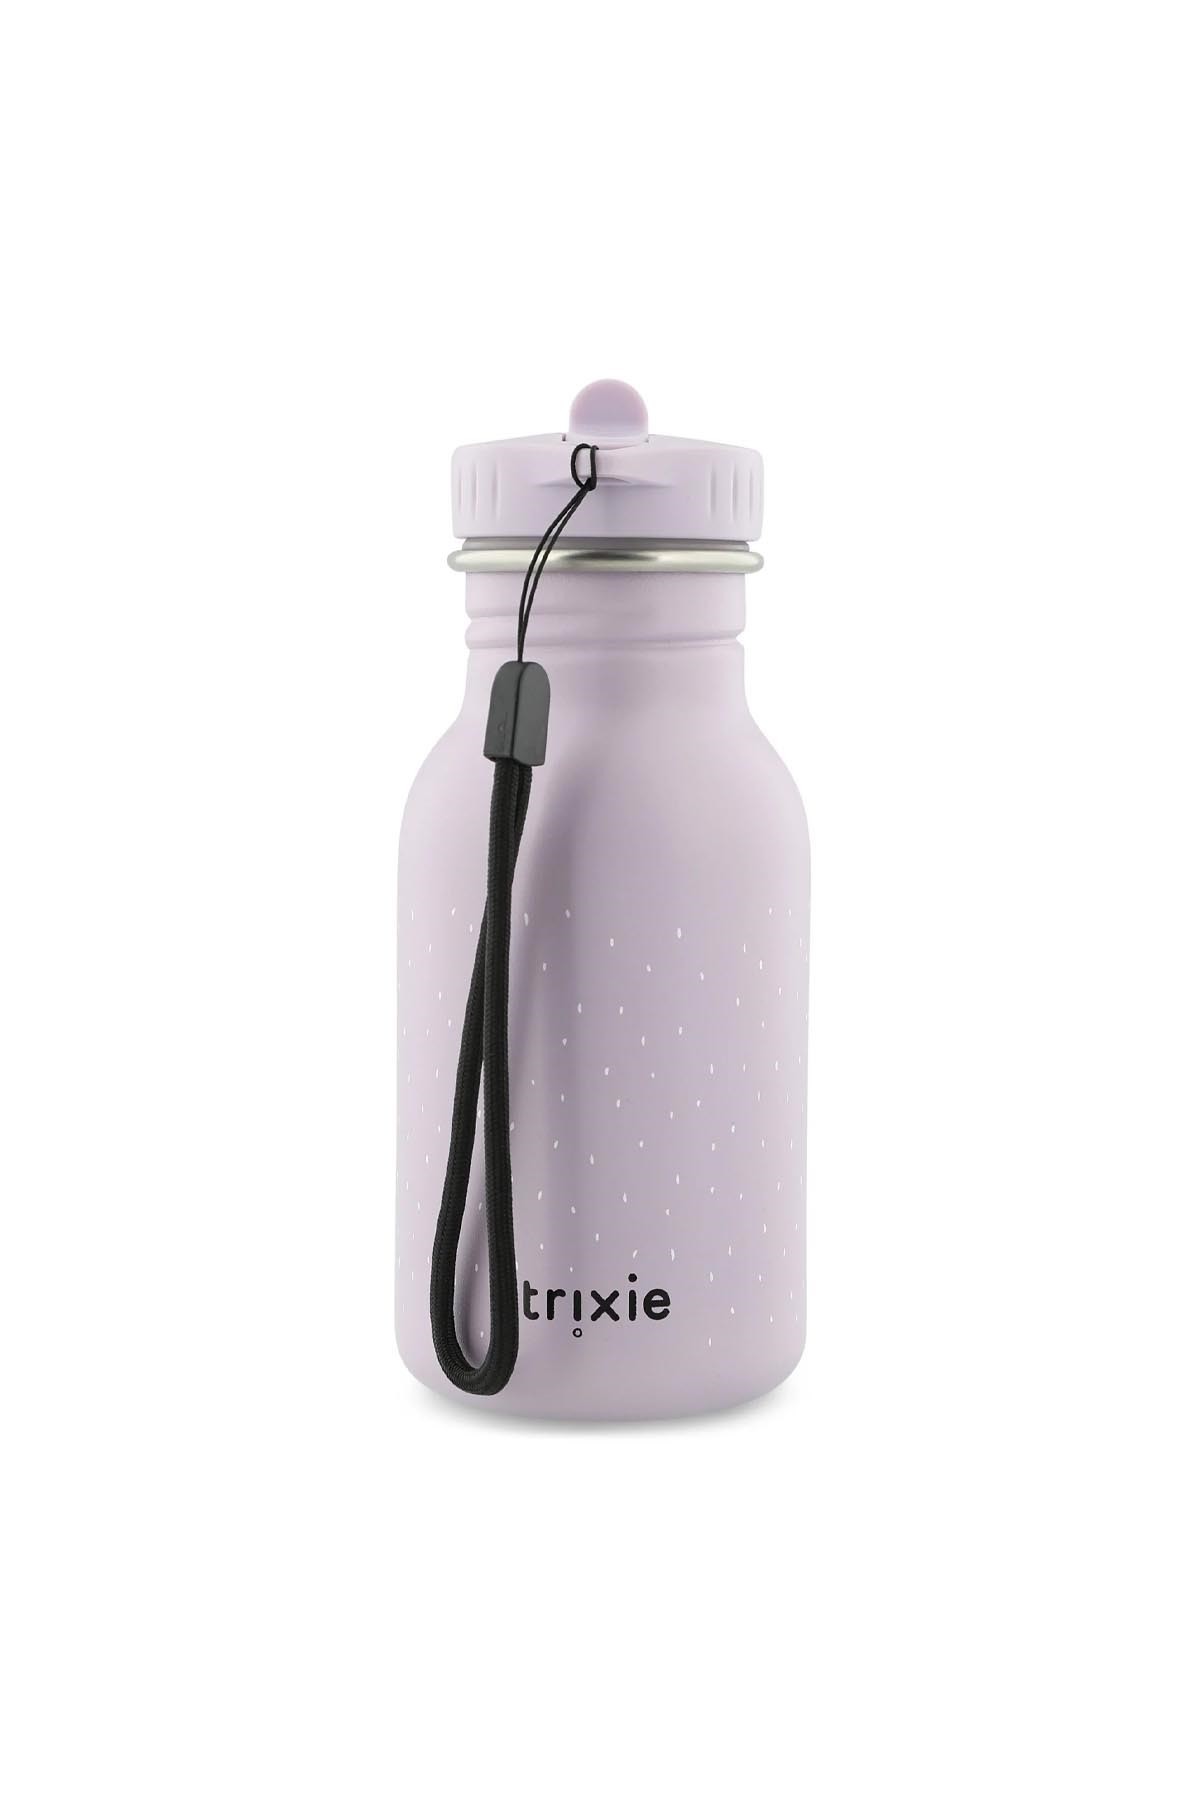 Trixie Bottle Matara Mrs. Mouse 350ml